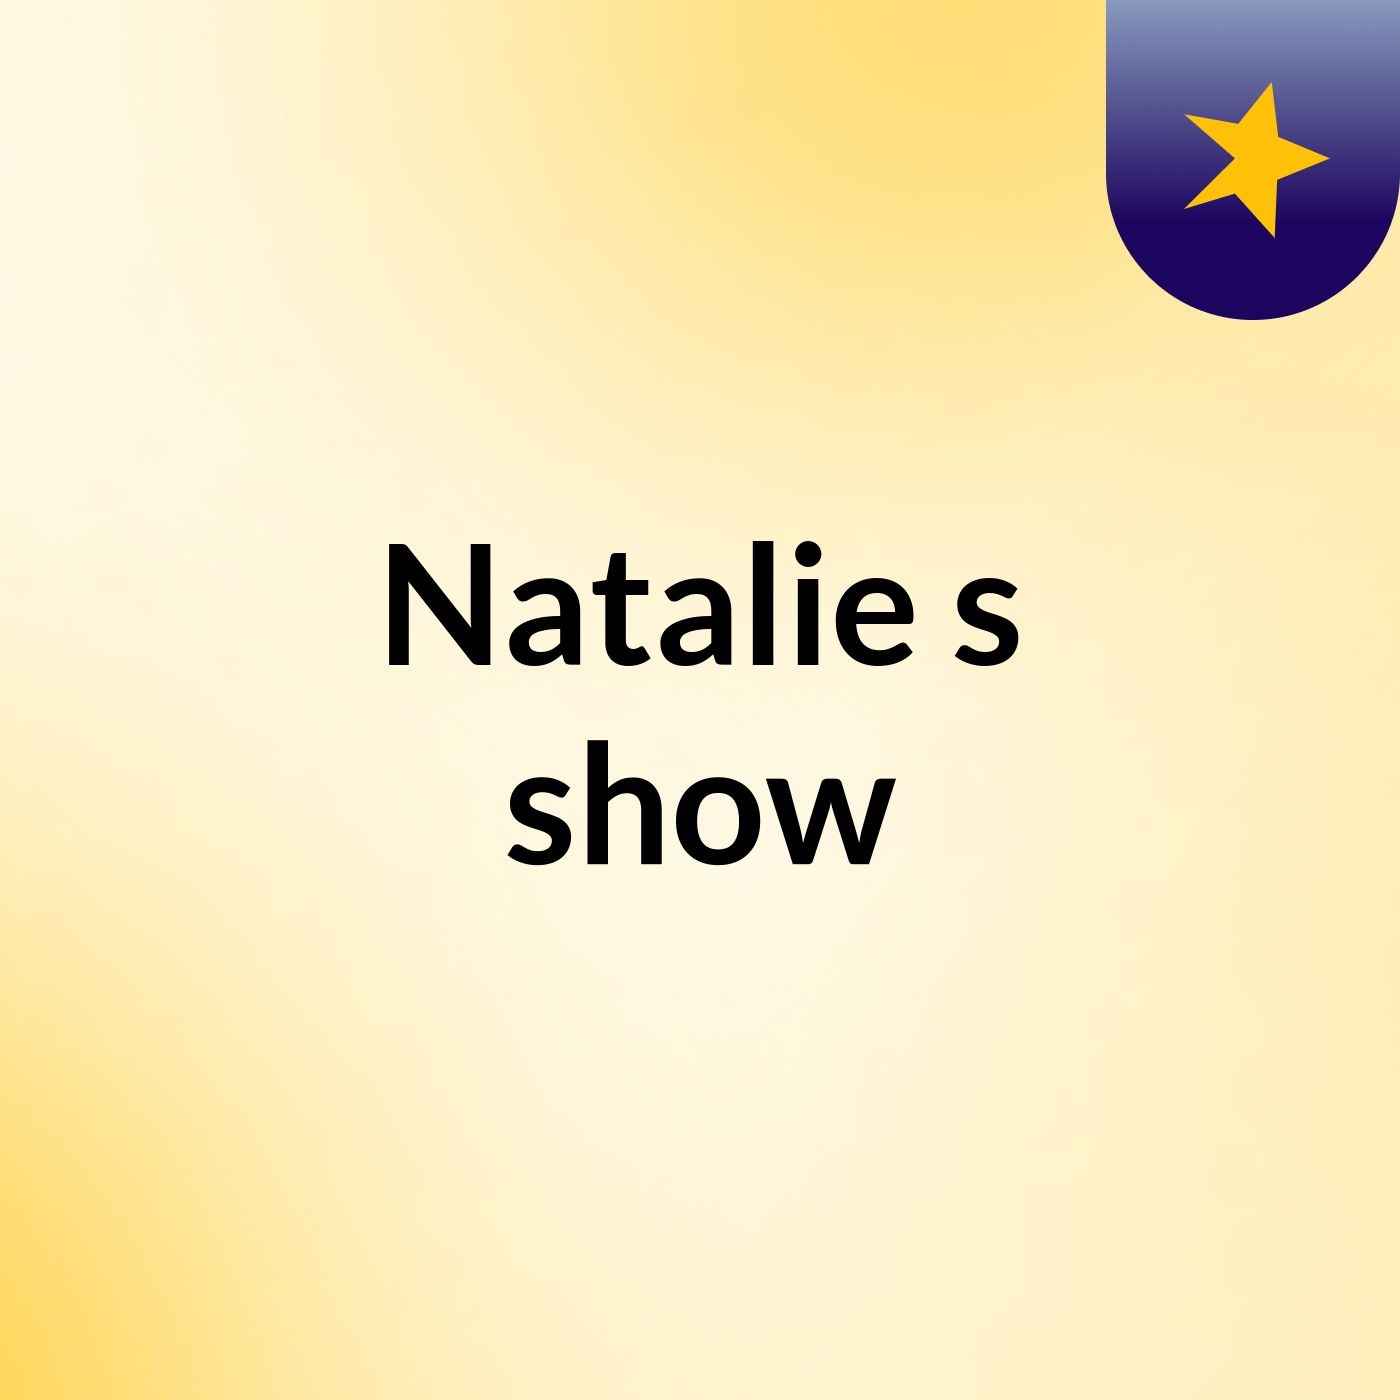 Natalie's show